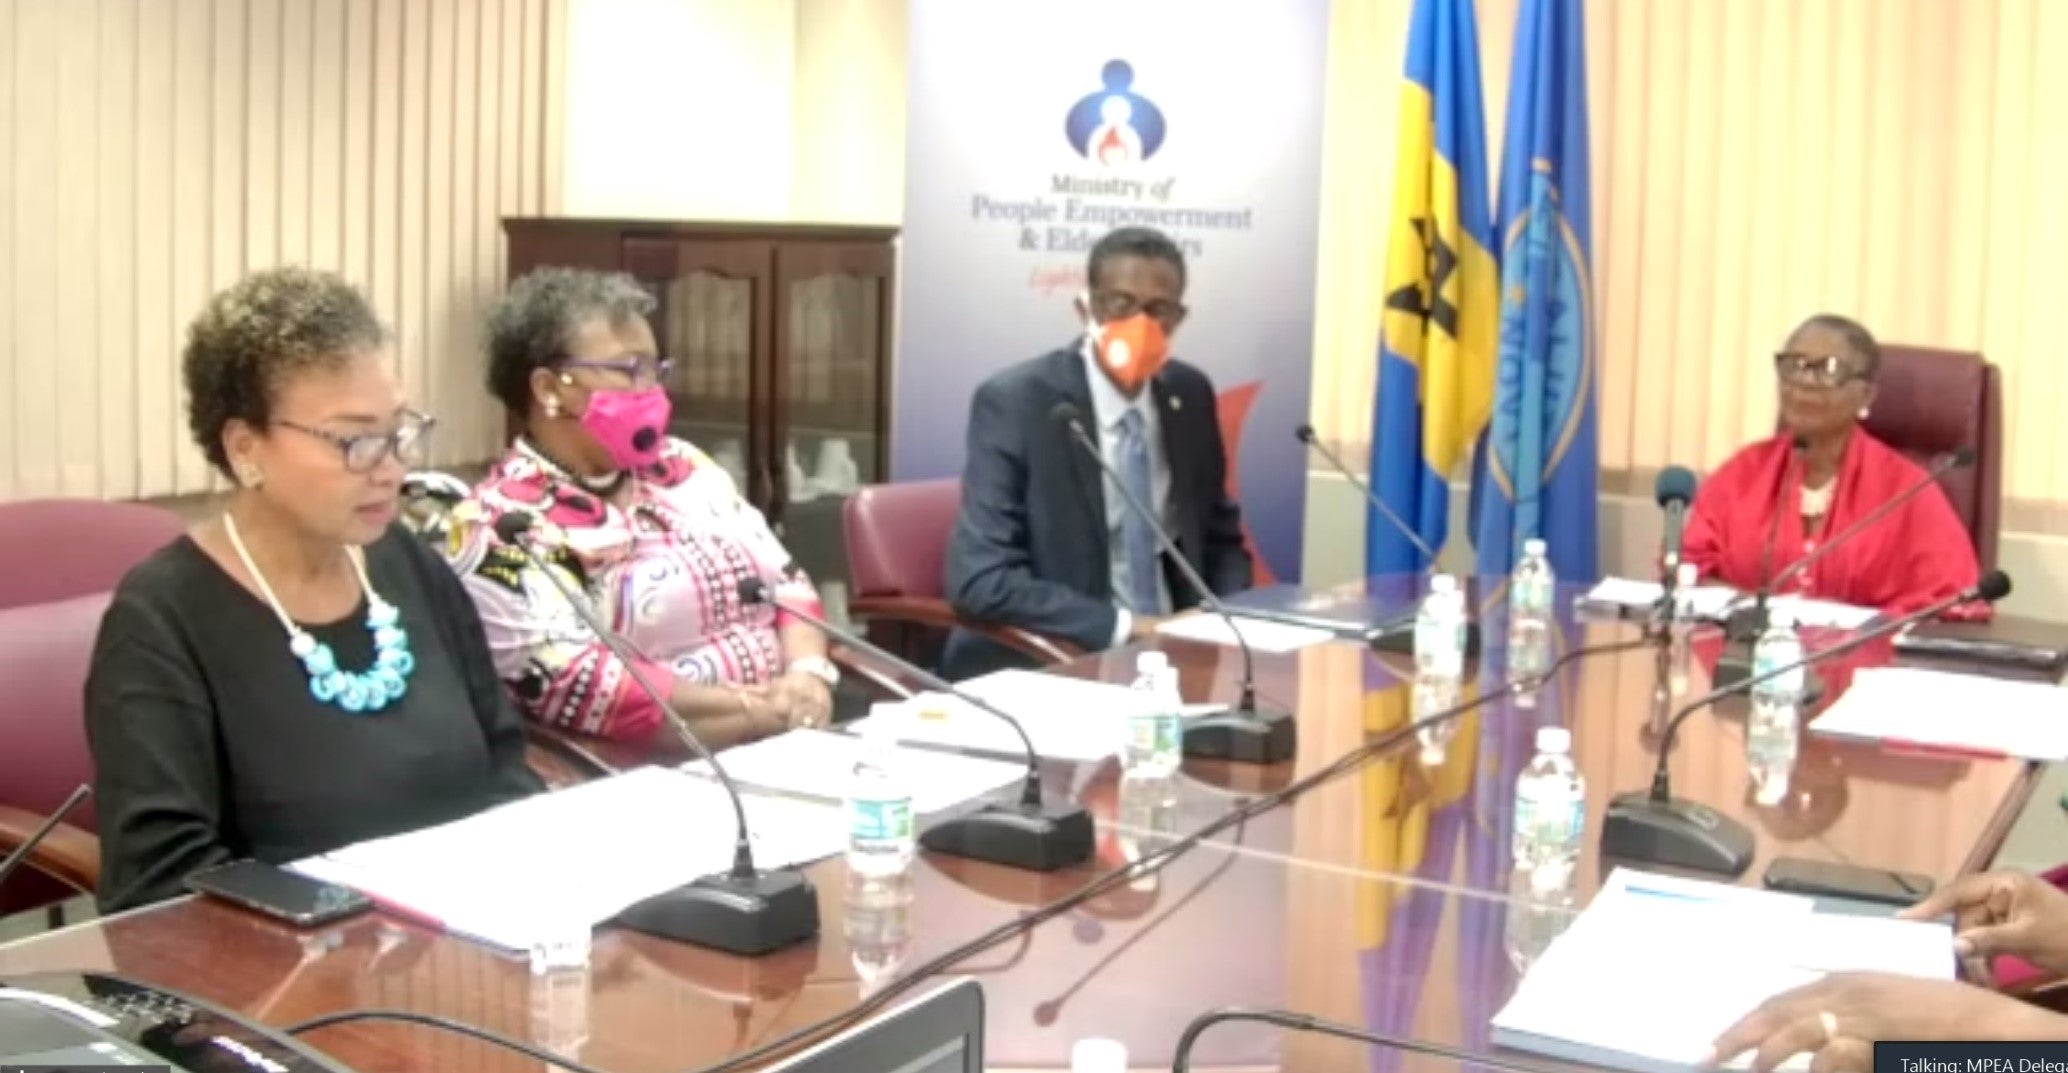 Representatives at ageing consultation in Barbados